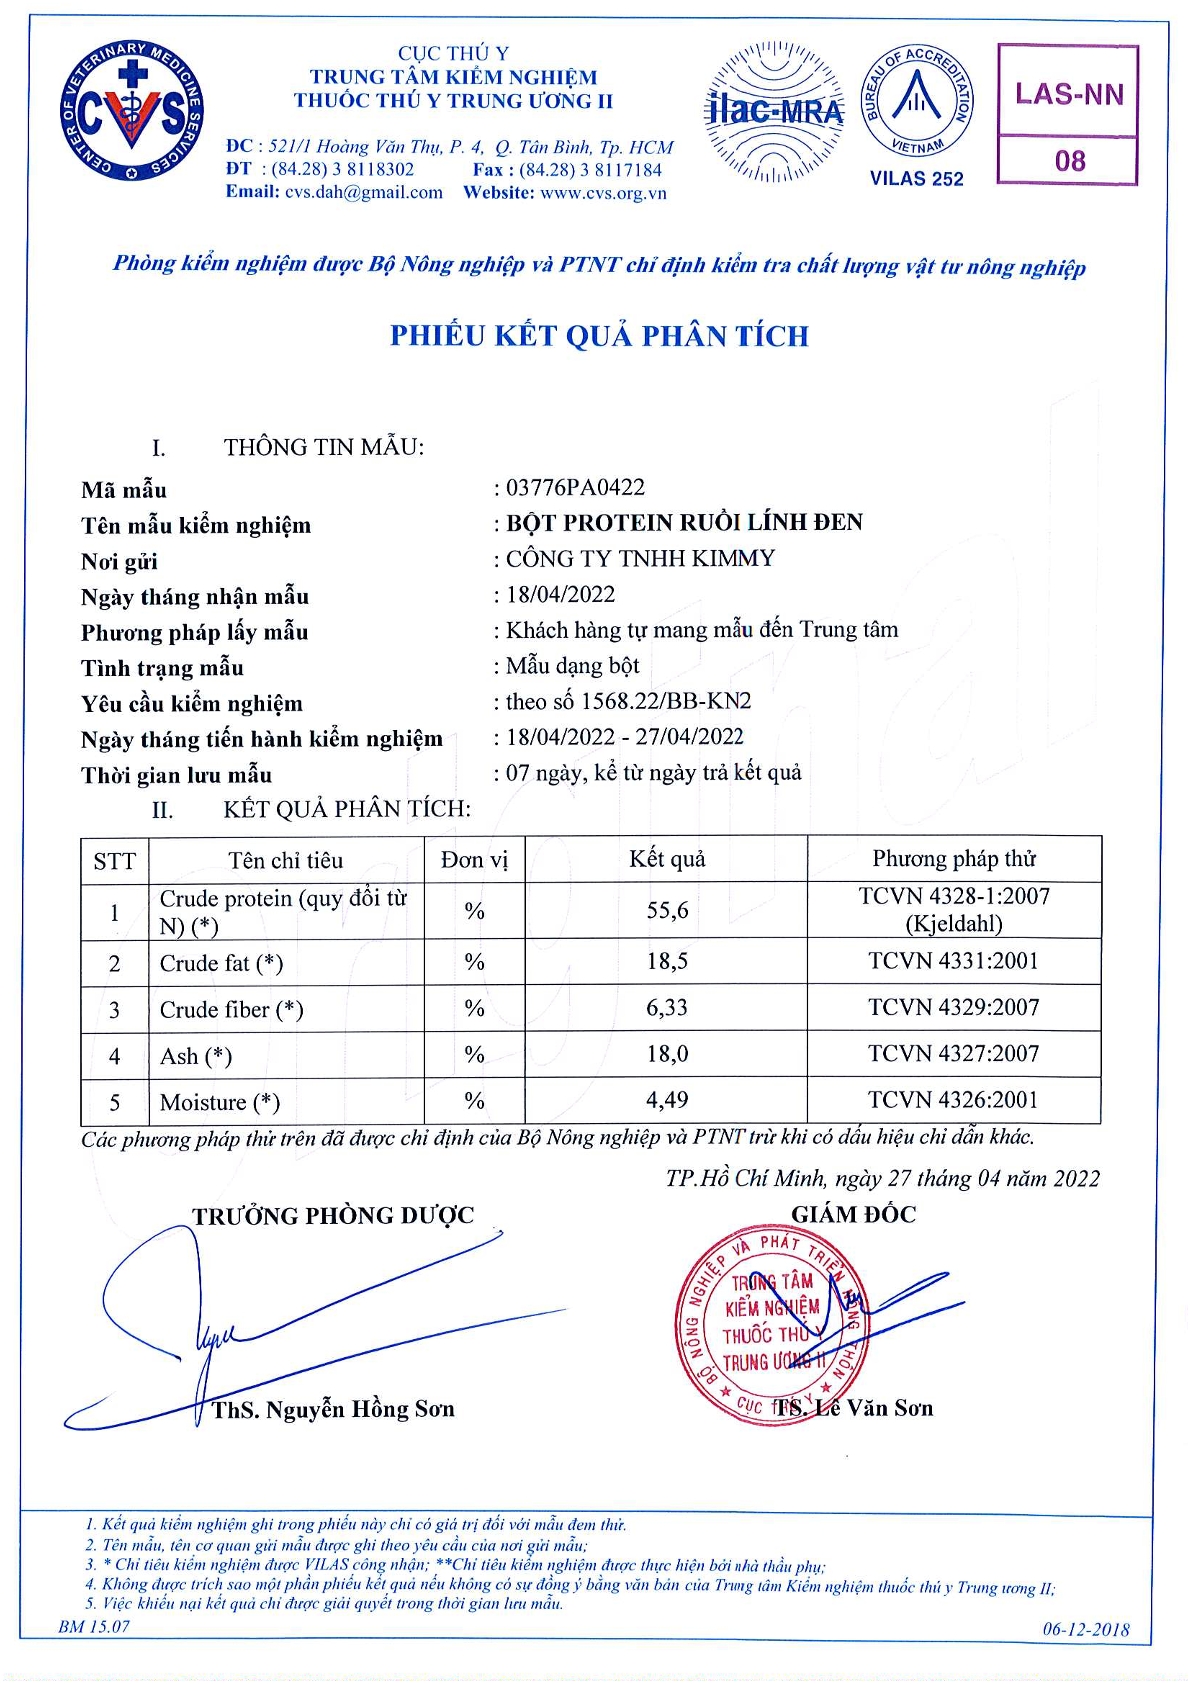 Test Report of BSFL Protein Powder - Kimmy Farm Vietnam